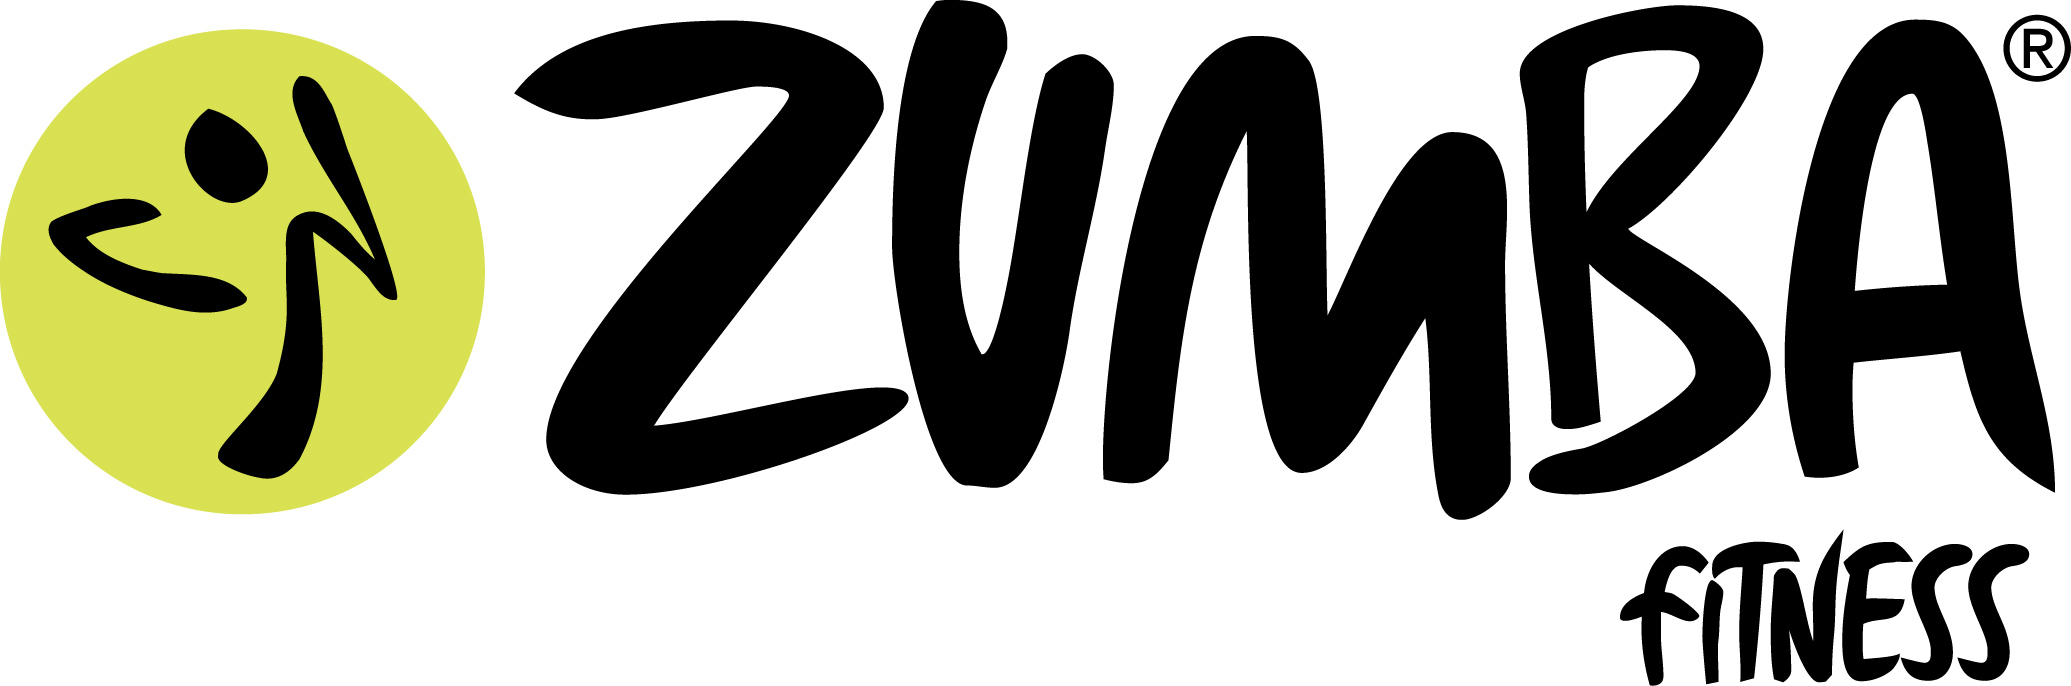 Zumba Fitness - Logo